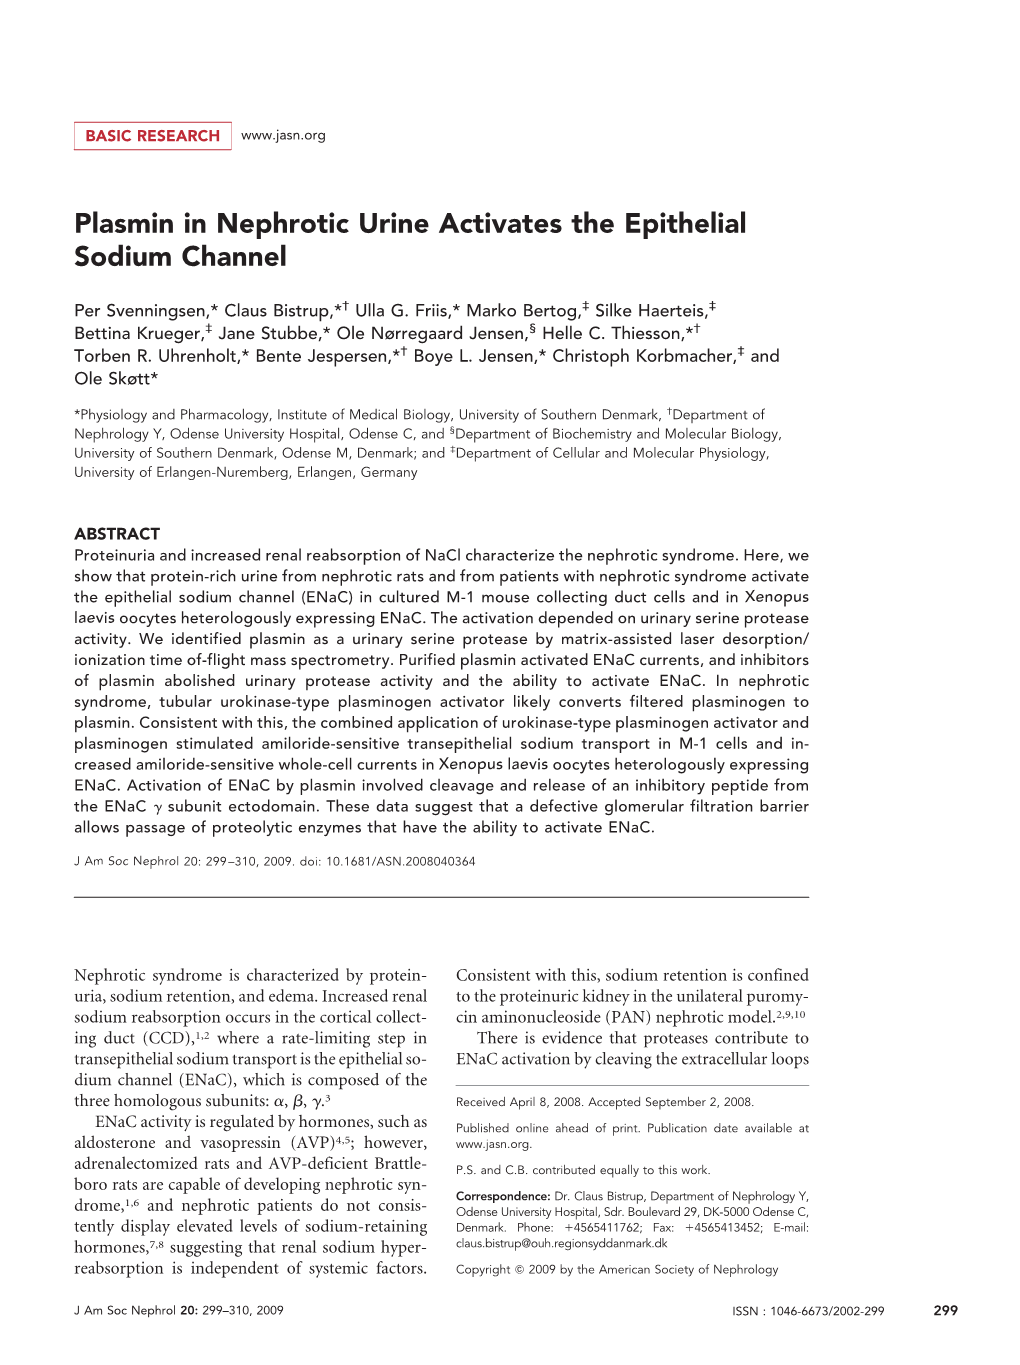 Plasmin in Nephrotic Urine Activates the Epithelial Sodium Channel